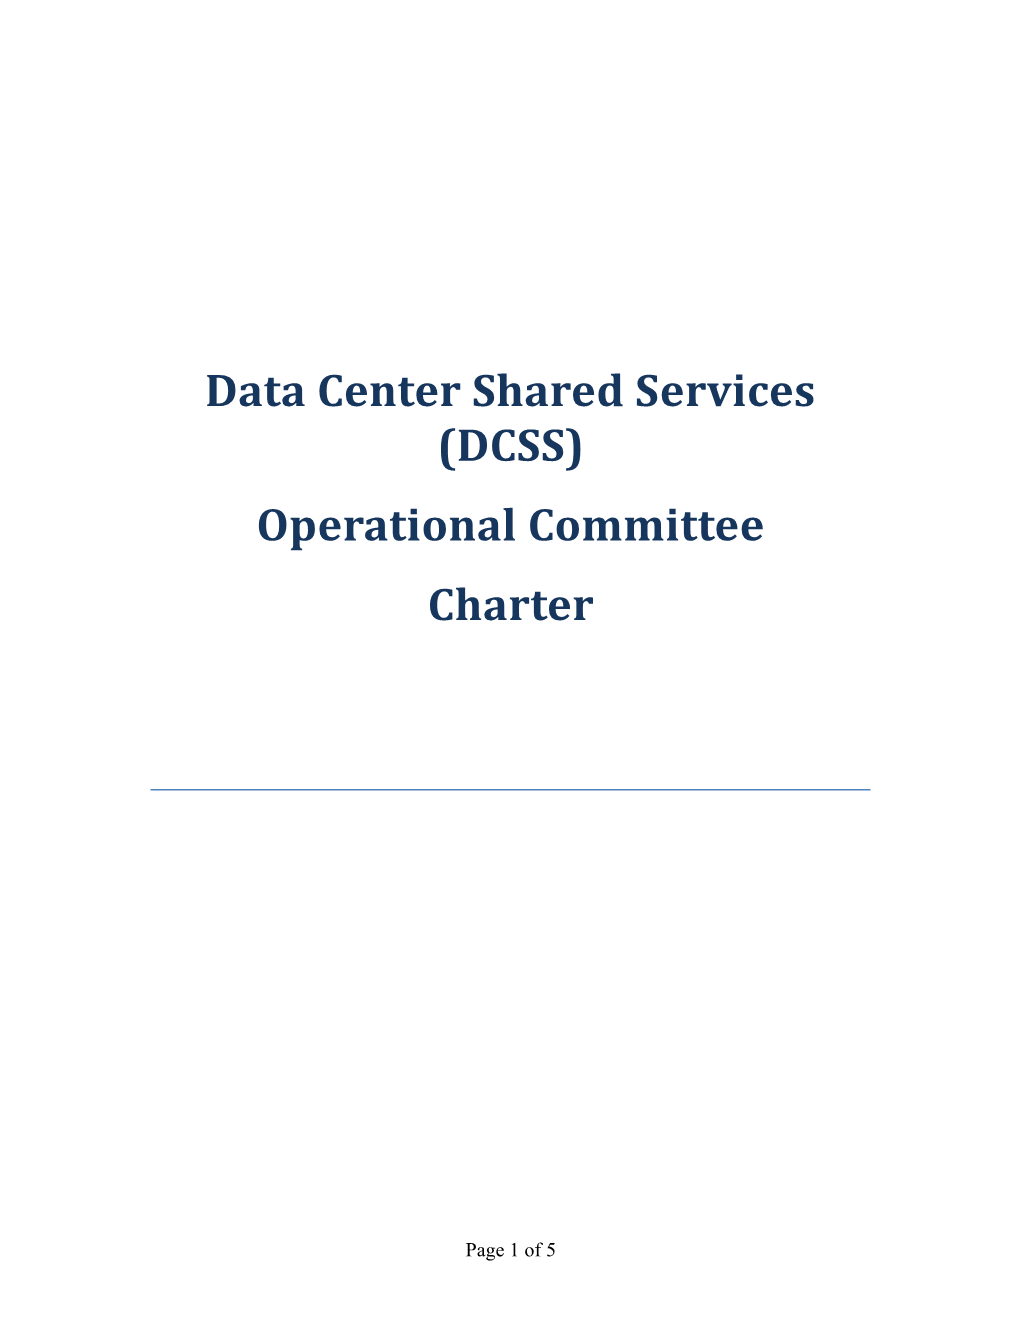 Data Center Operations Task Force